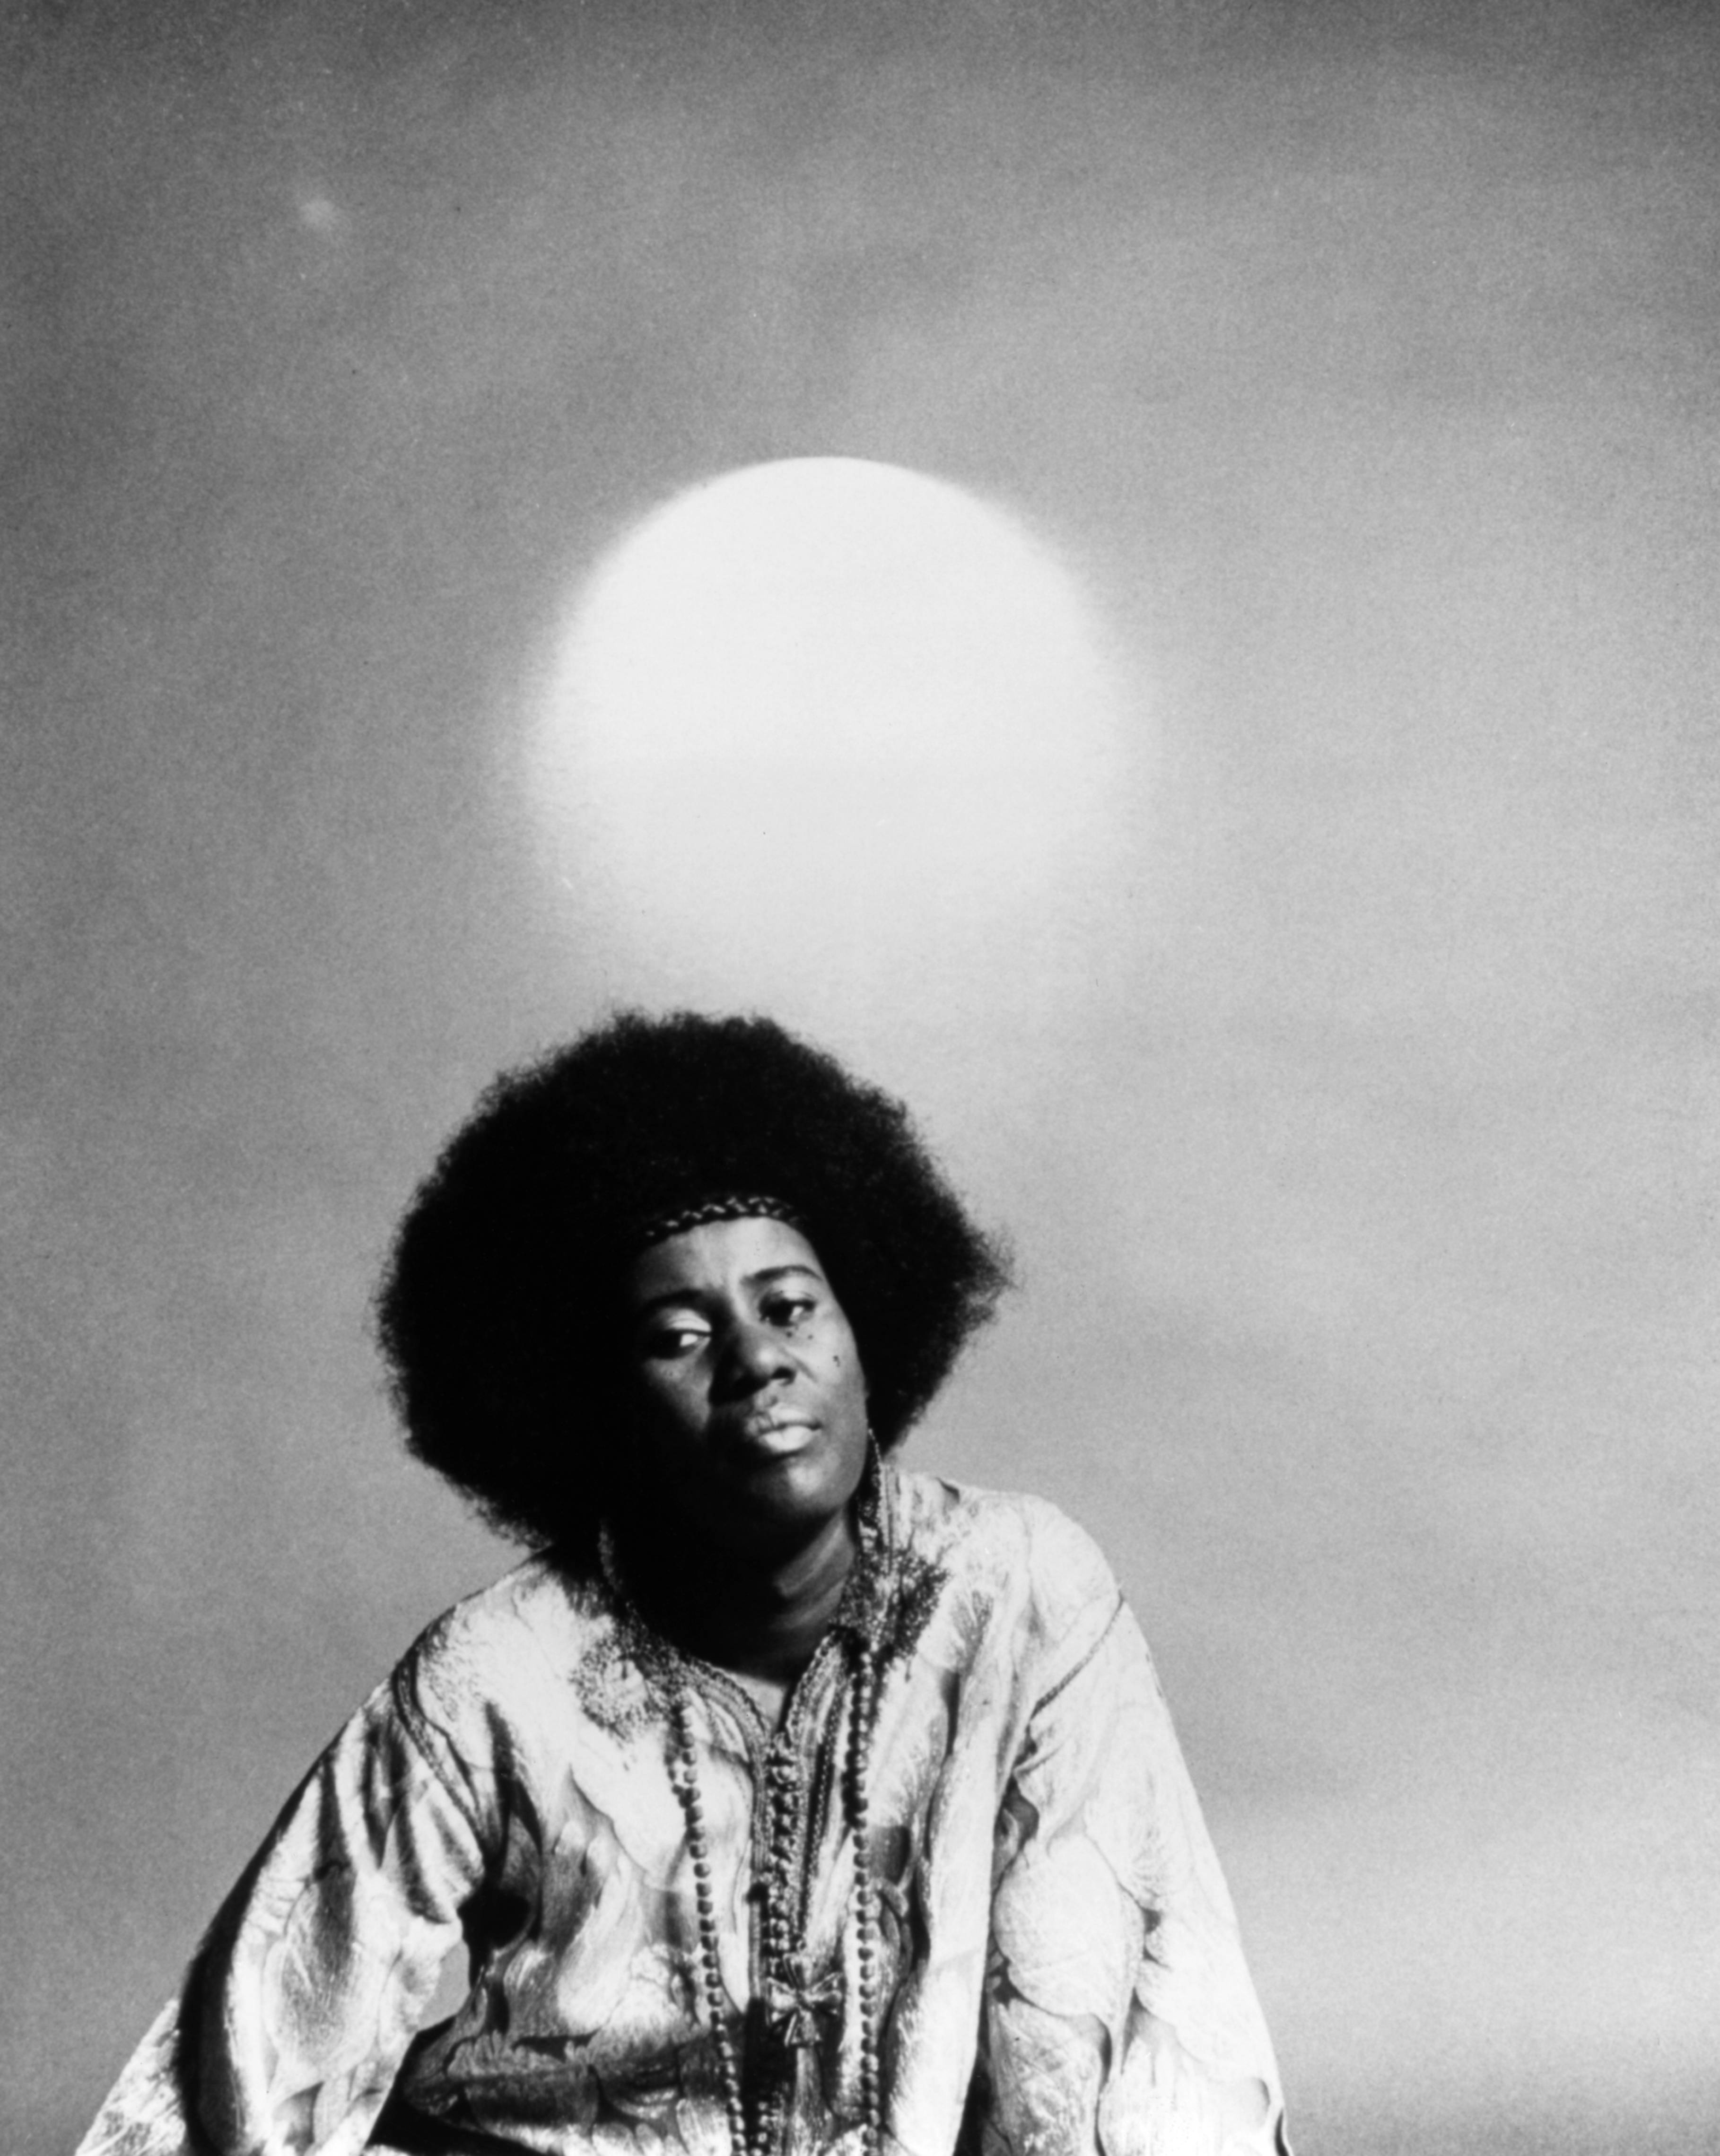 Studio Photo of Alice Coltrane in 1970. I Image: Getty Images.